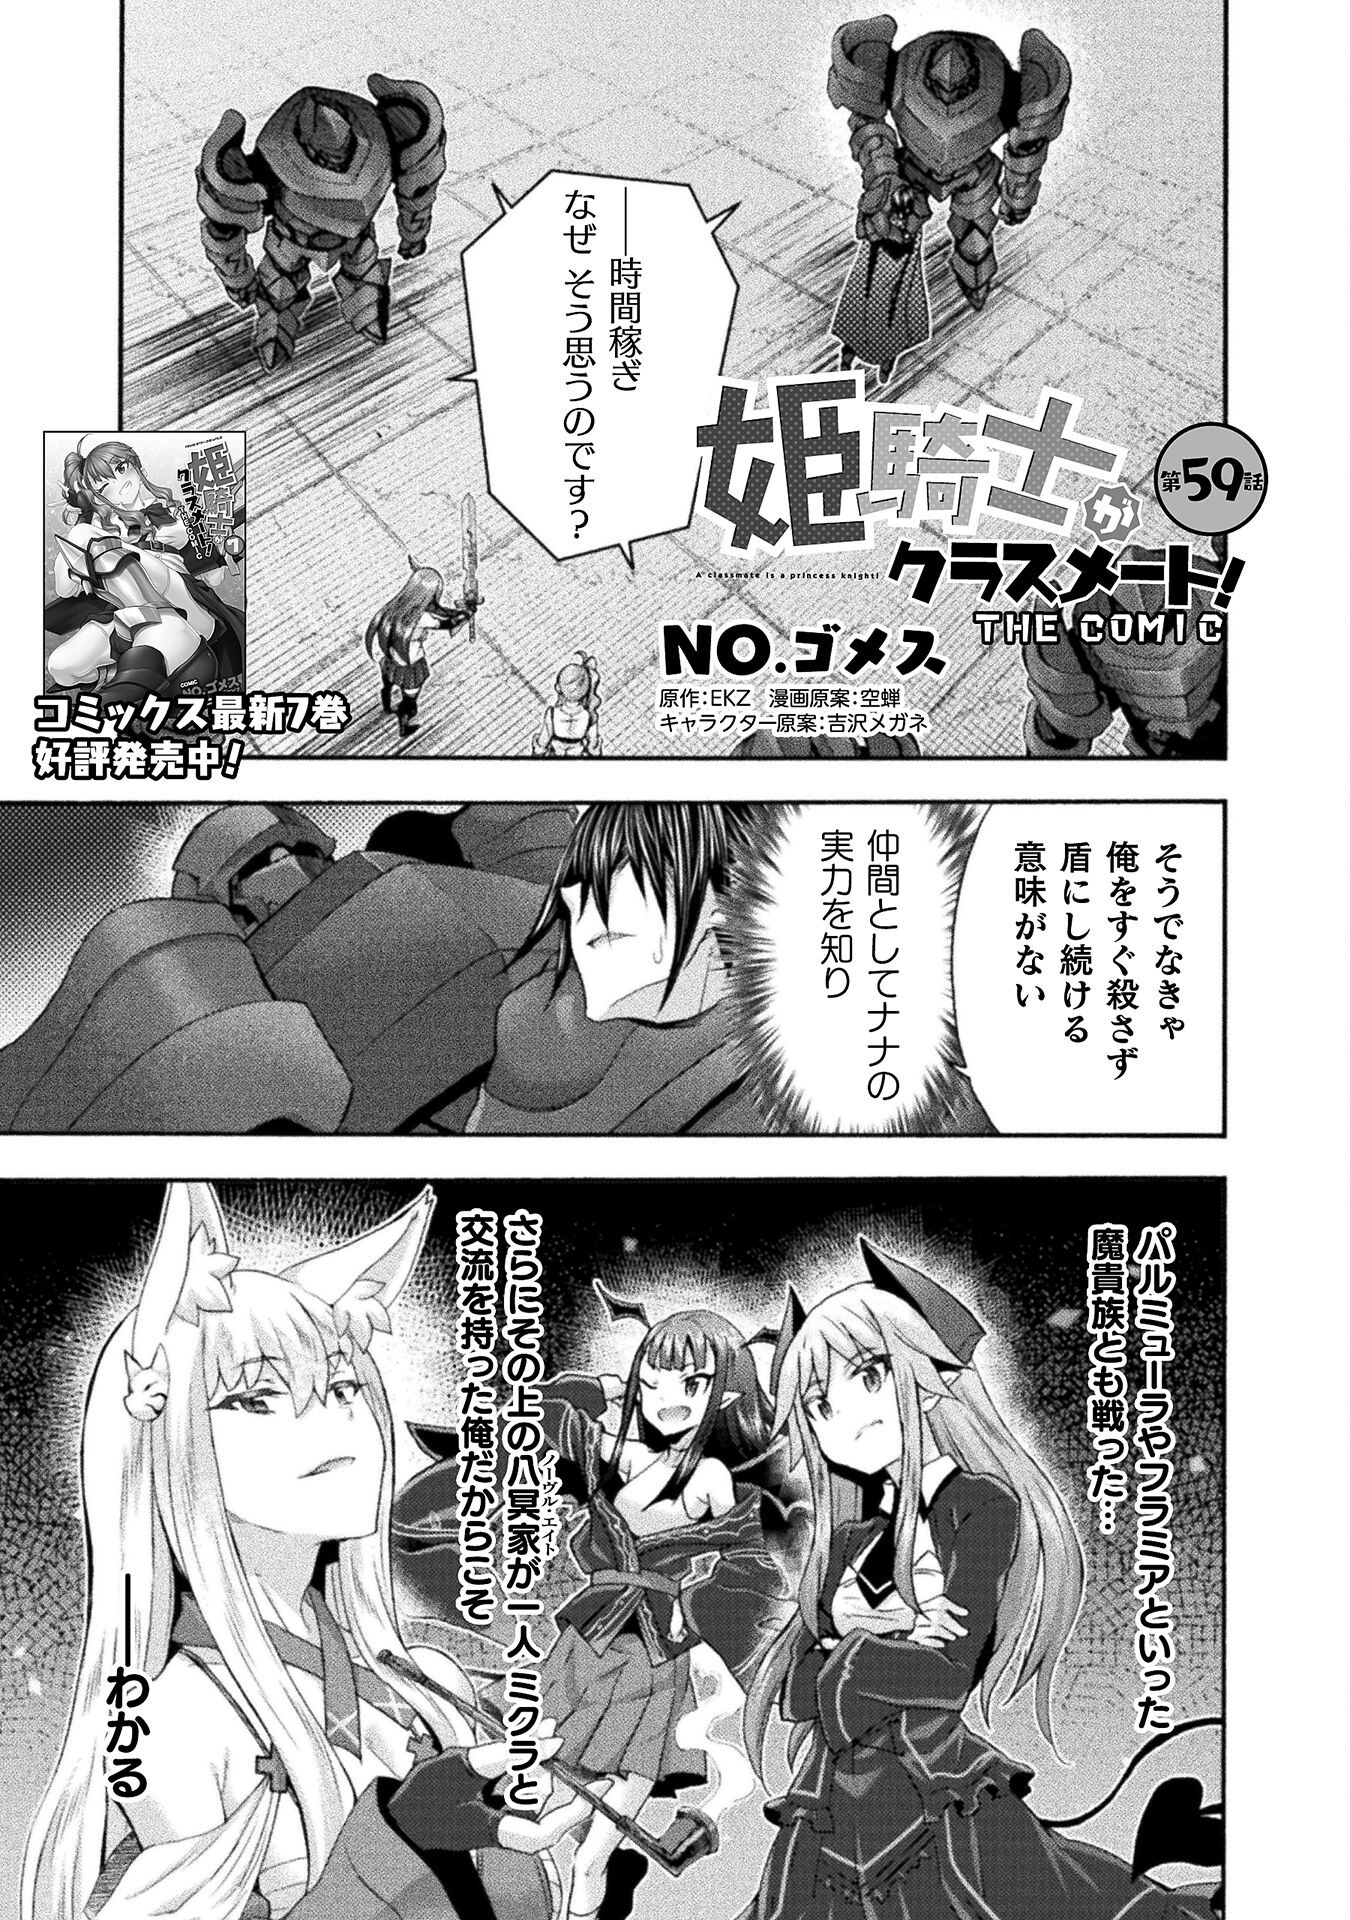 Himekishi ga Classmate! - Chapter 59 - Page 1